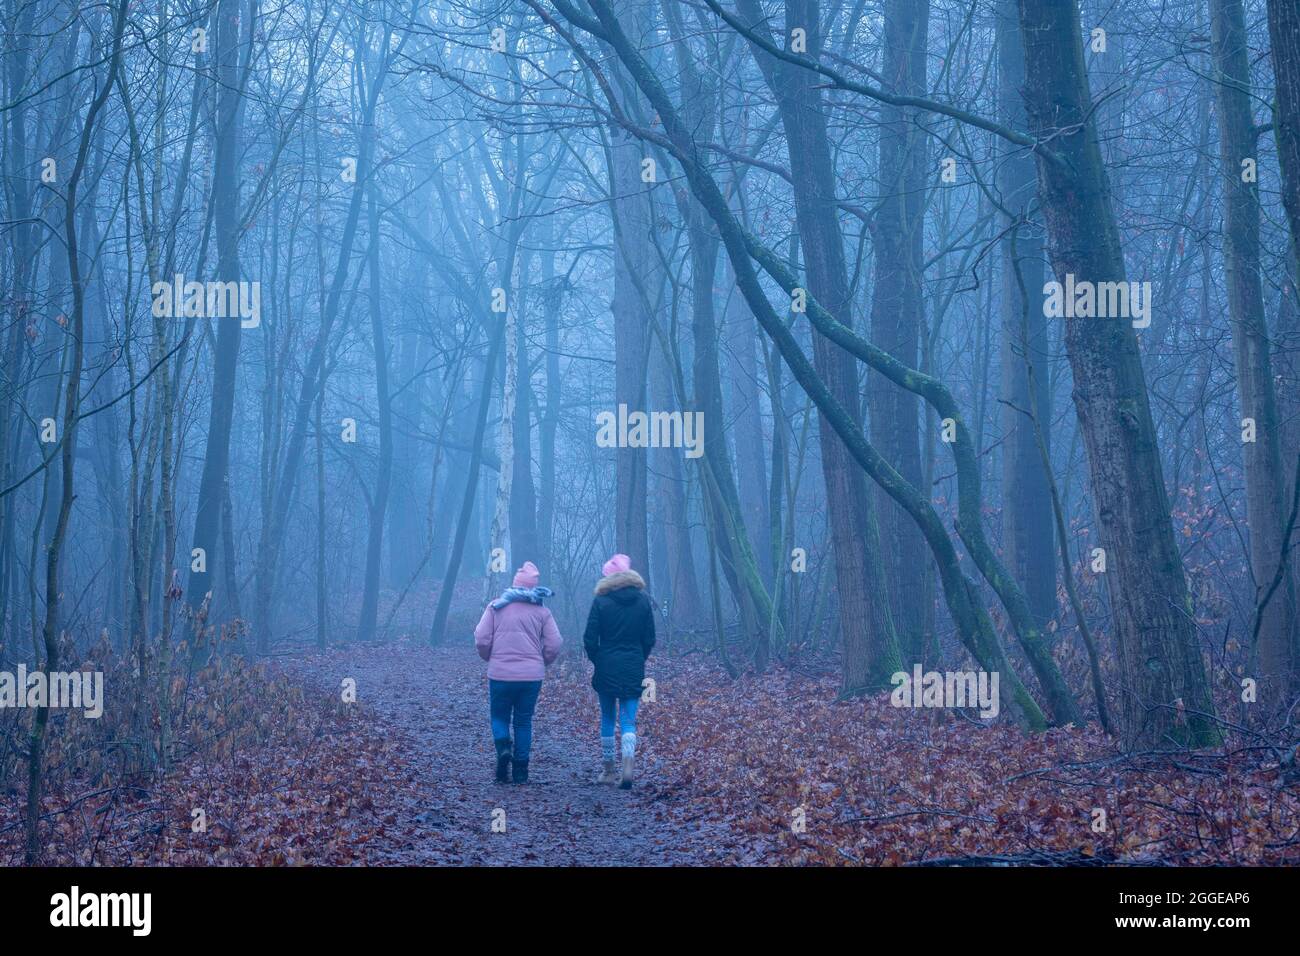 Forest walk through misty forest Stock Photo